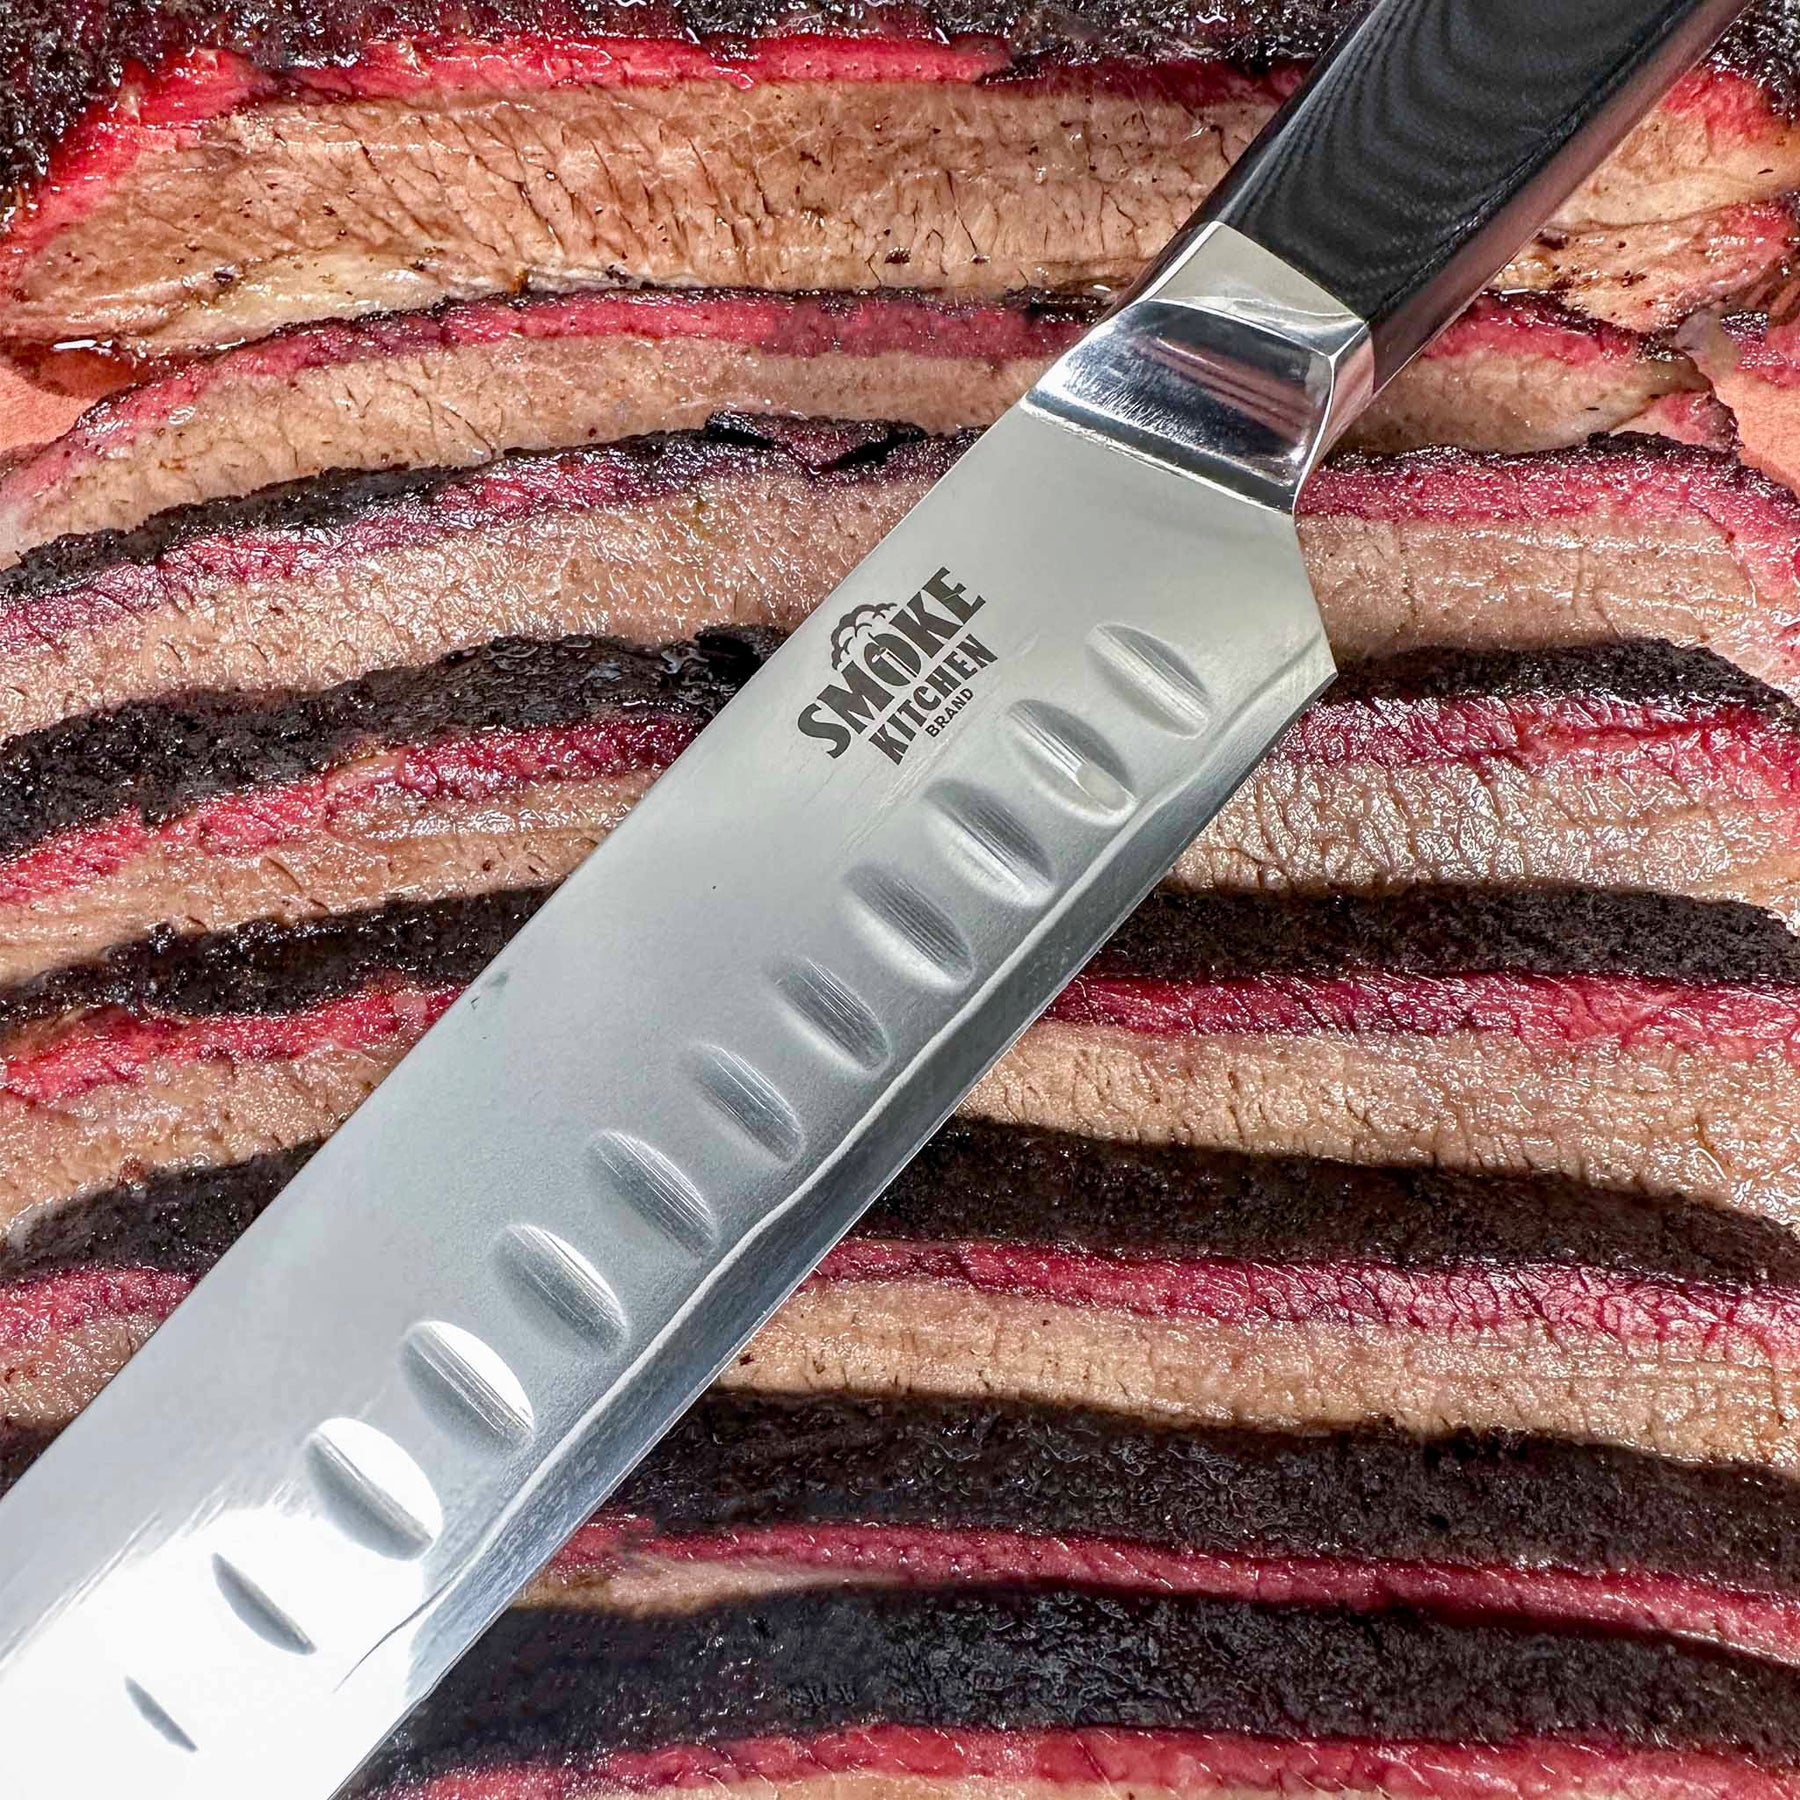 Kitory Slicing Carving Knife 12 Brisket Knife for Meat Turkey